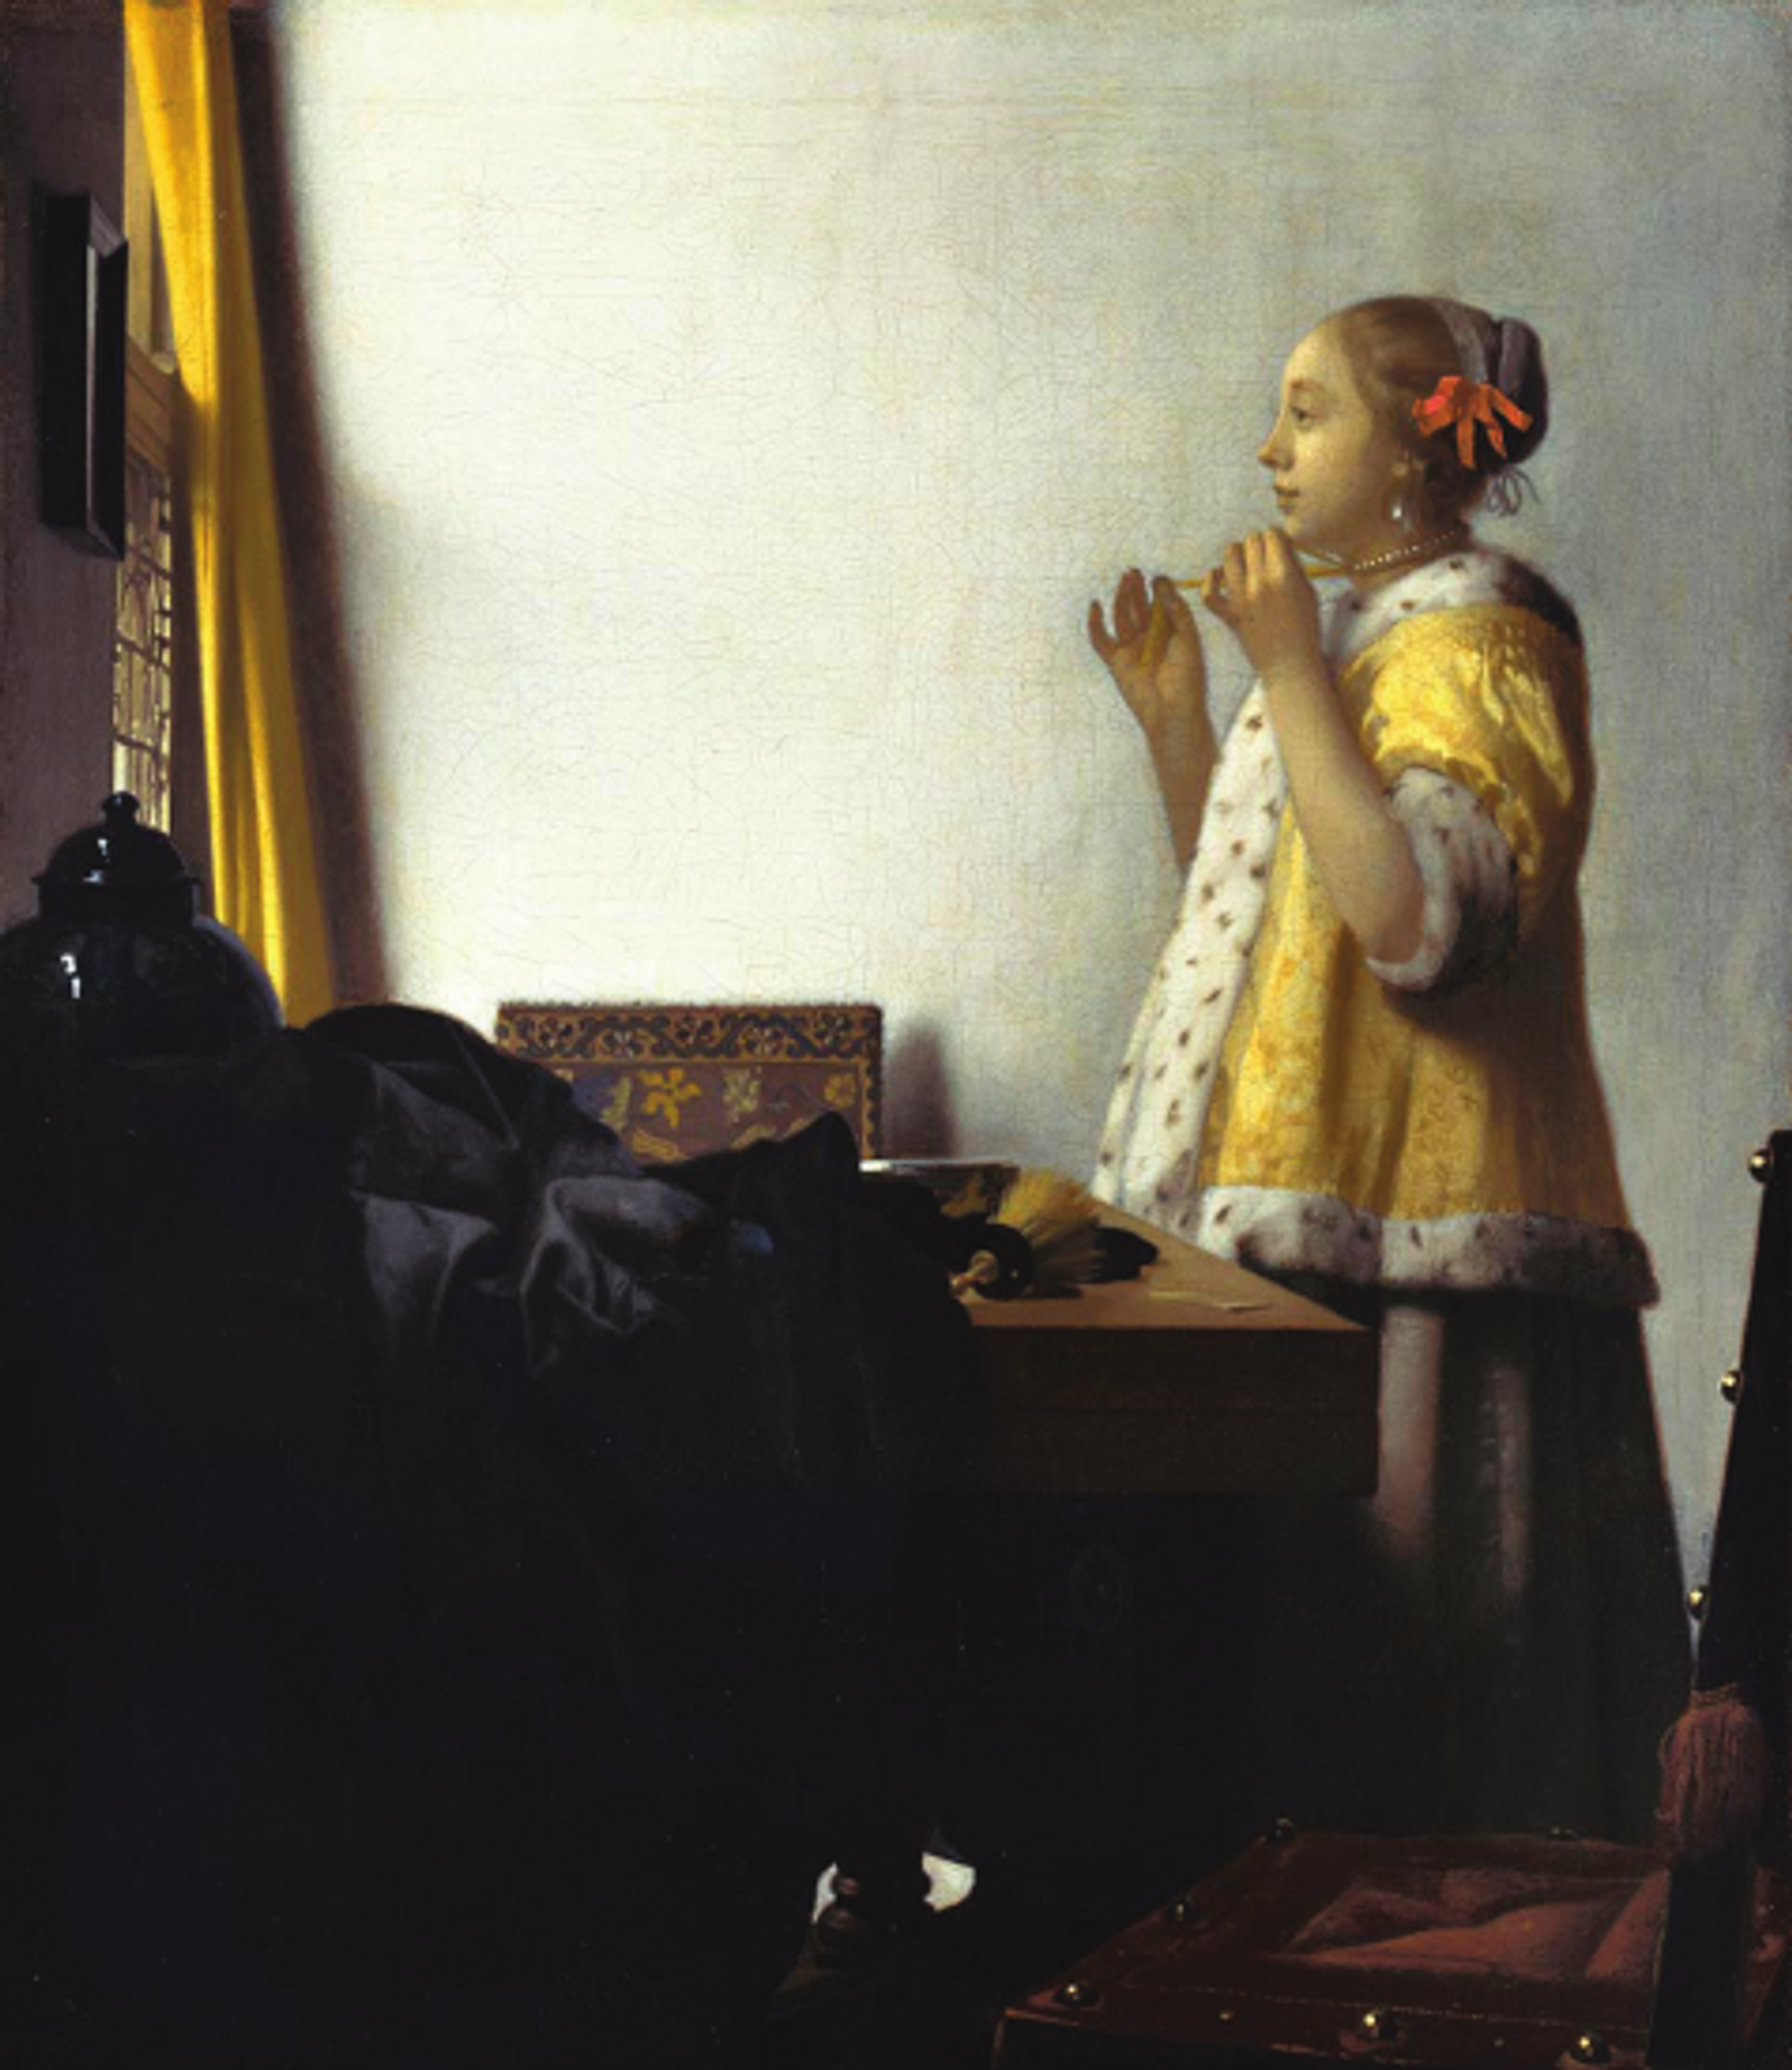 Johannes Vermeer, La Dame au collier de perles, vers 1662-1664, huile sur toile, Gemäldegalerie, Berlin. © Staatliche Museen zu Berlin, Gemäldegalerie/ Christoph Schmidt
